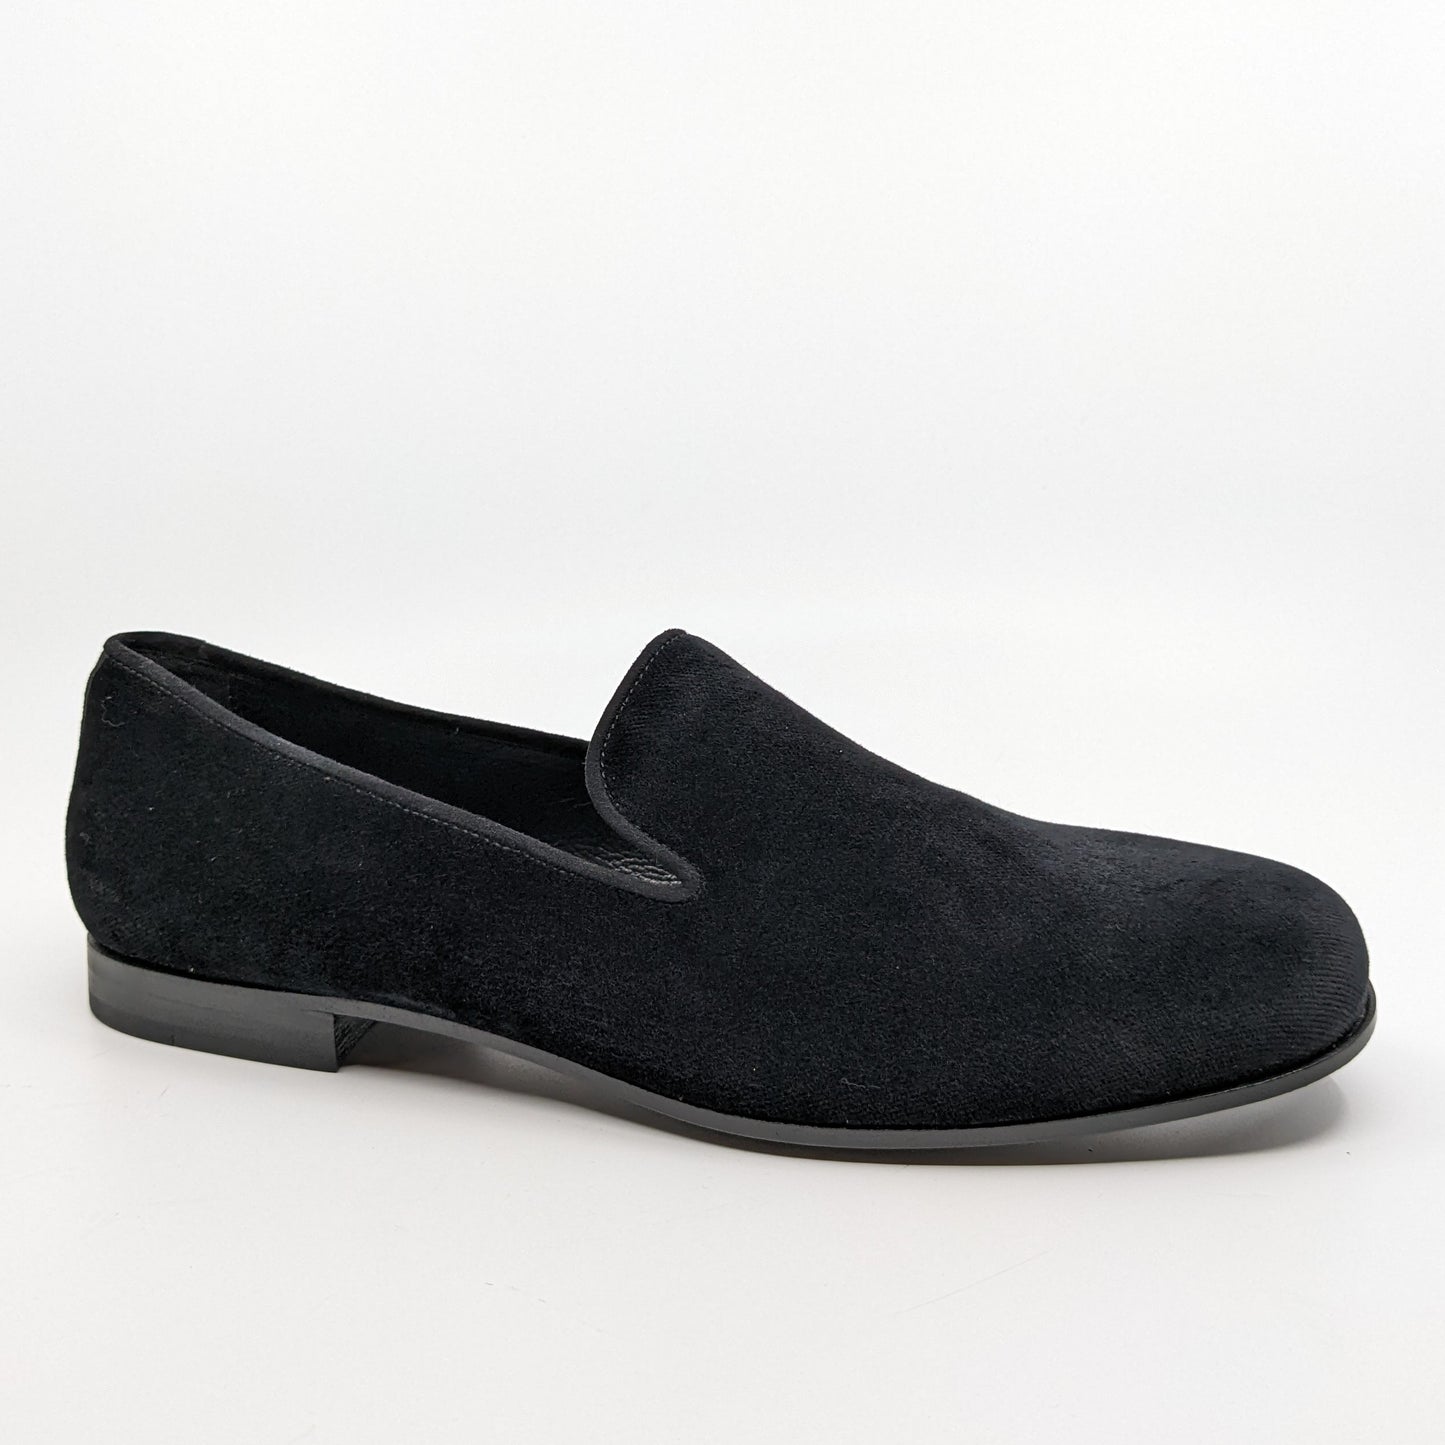 black slipper with black sole